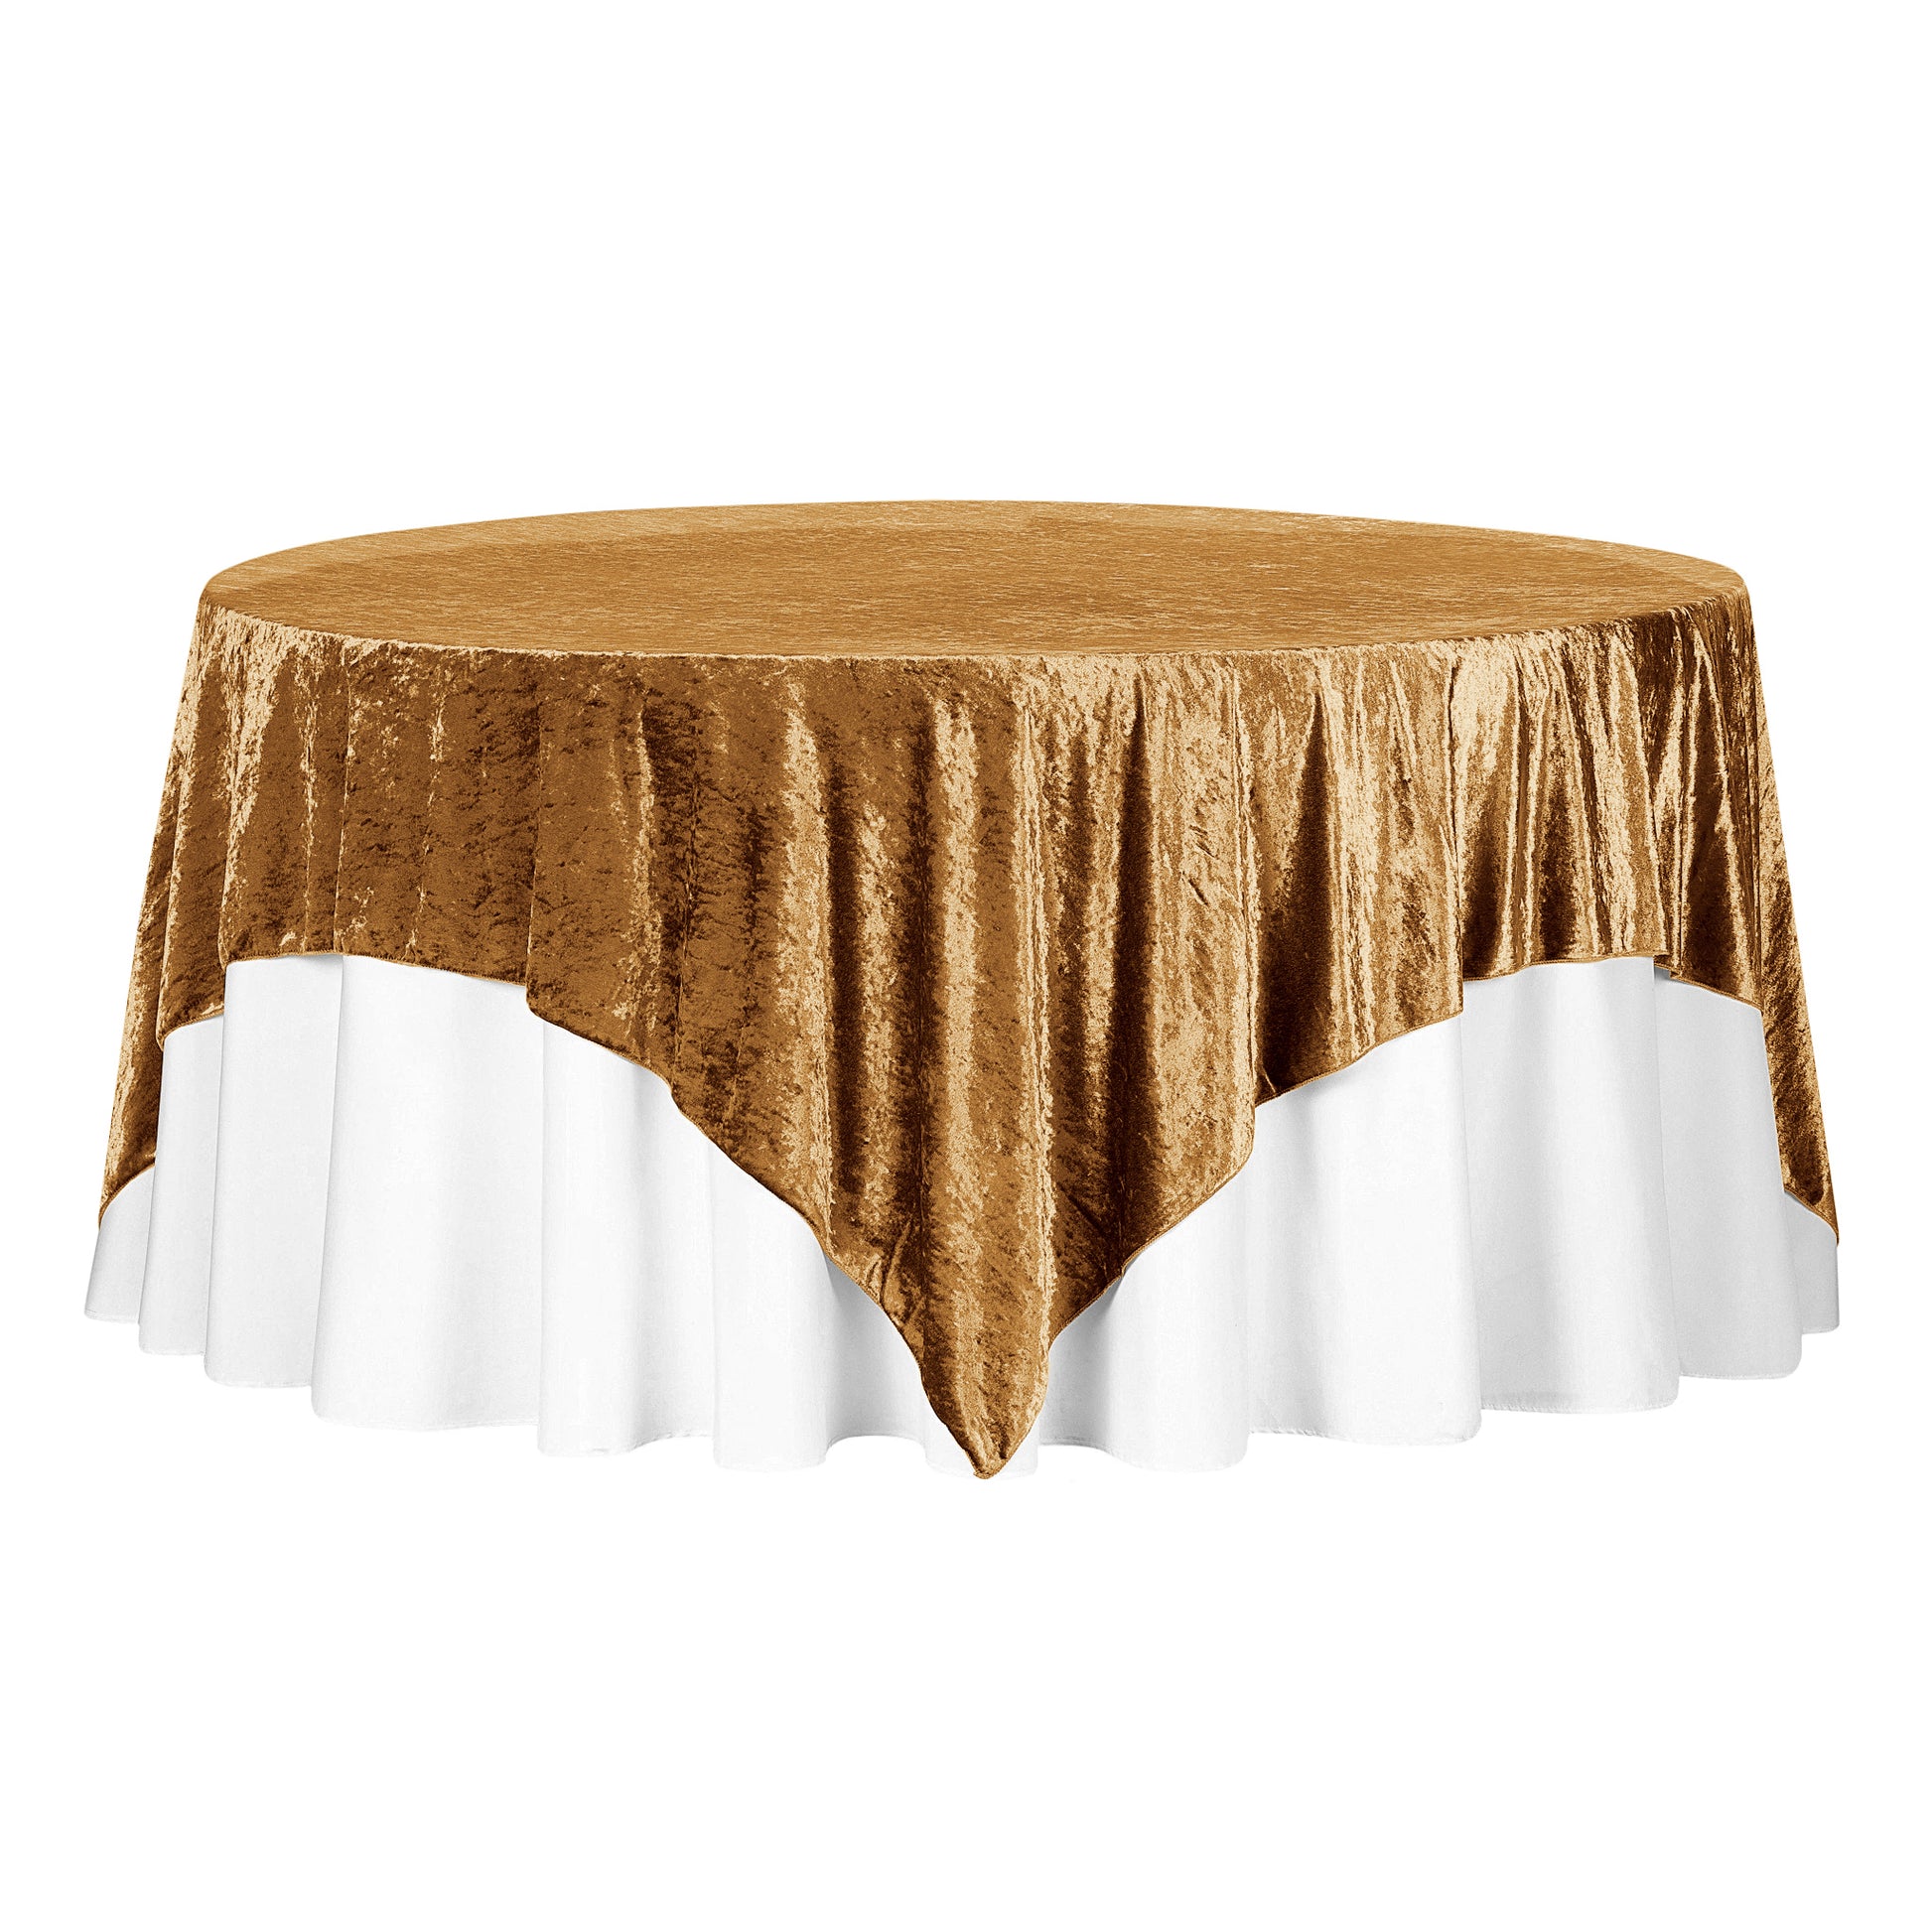 Velvet 85"x85" Square Tablecloth Table Overlay - Mustard Gold - CV Linens